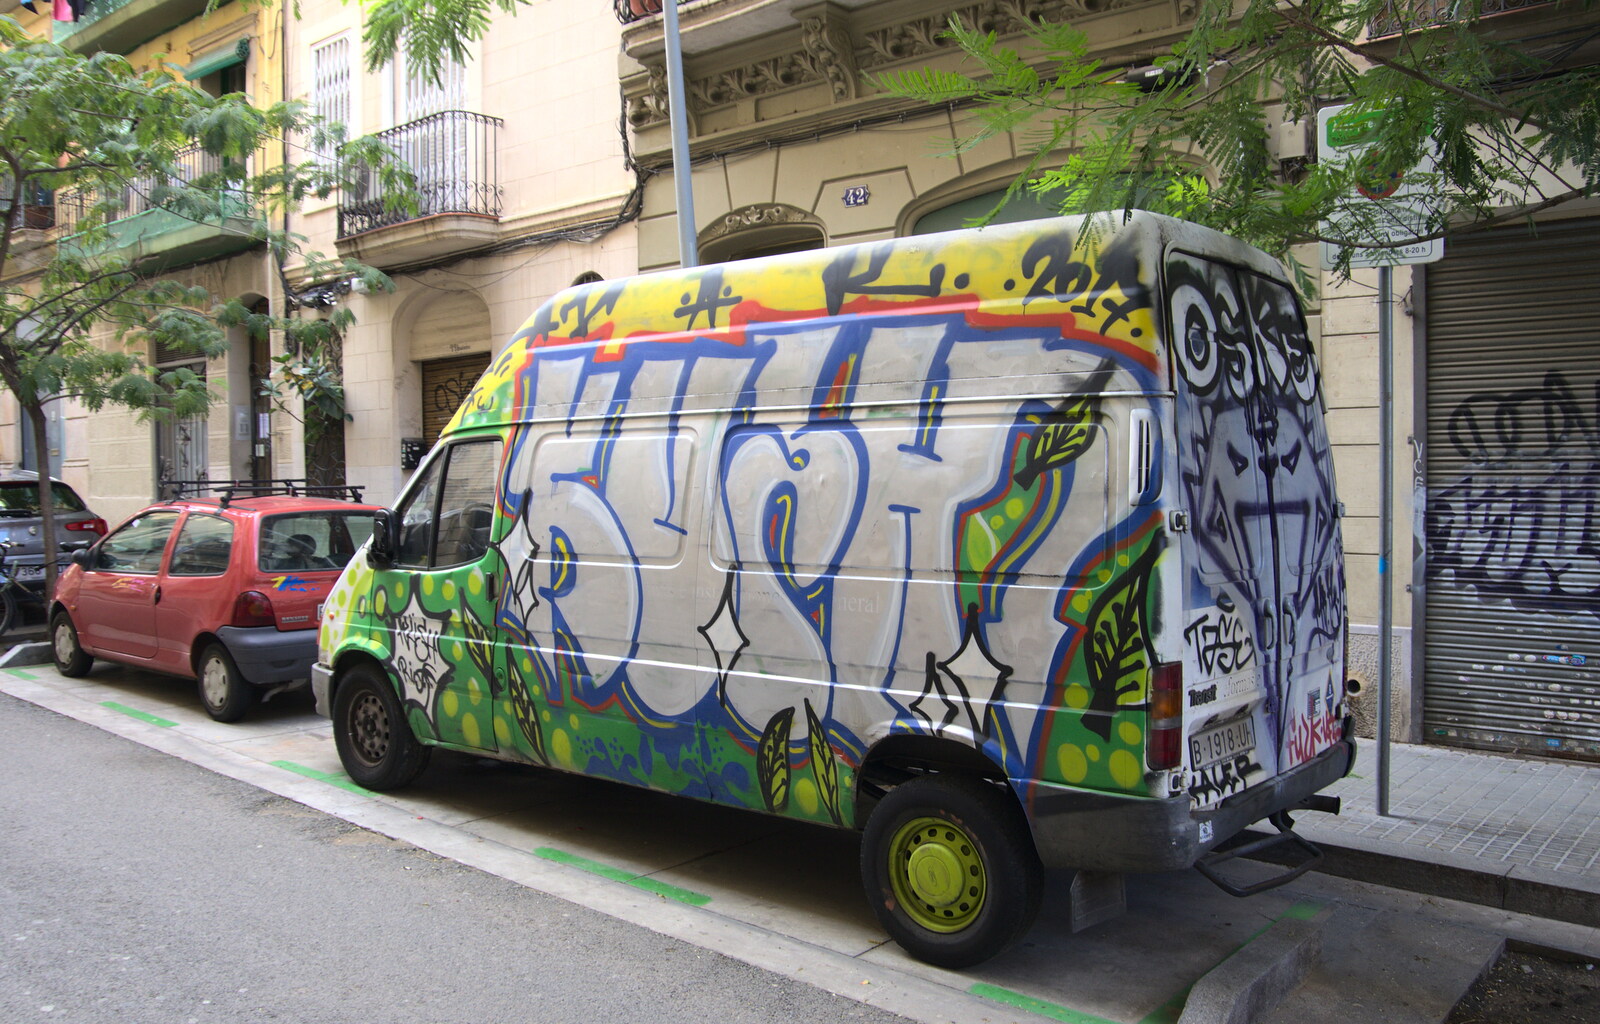 Graffiti van from Barcelona and Parc Montjuïc, Catalonia, Spain - 21st October 2017